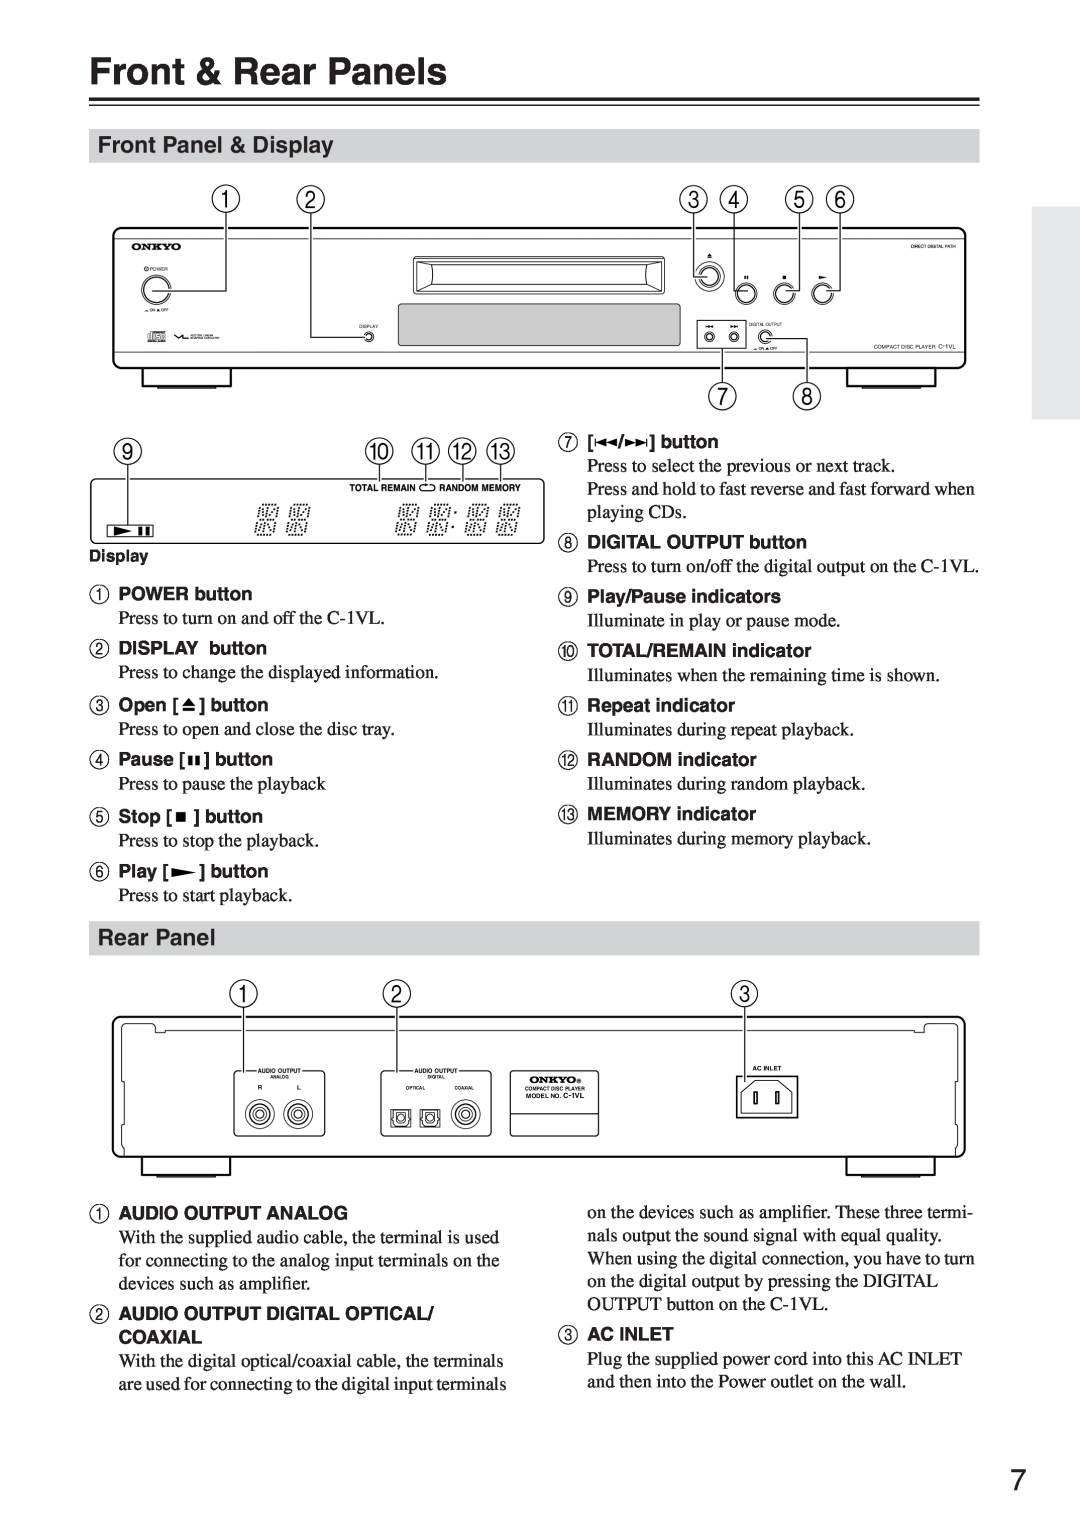 Onkyo C-1VL instruction manual Front & Rear Panels, Front Panel & Display 